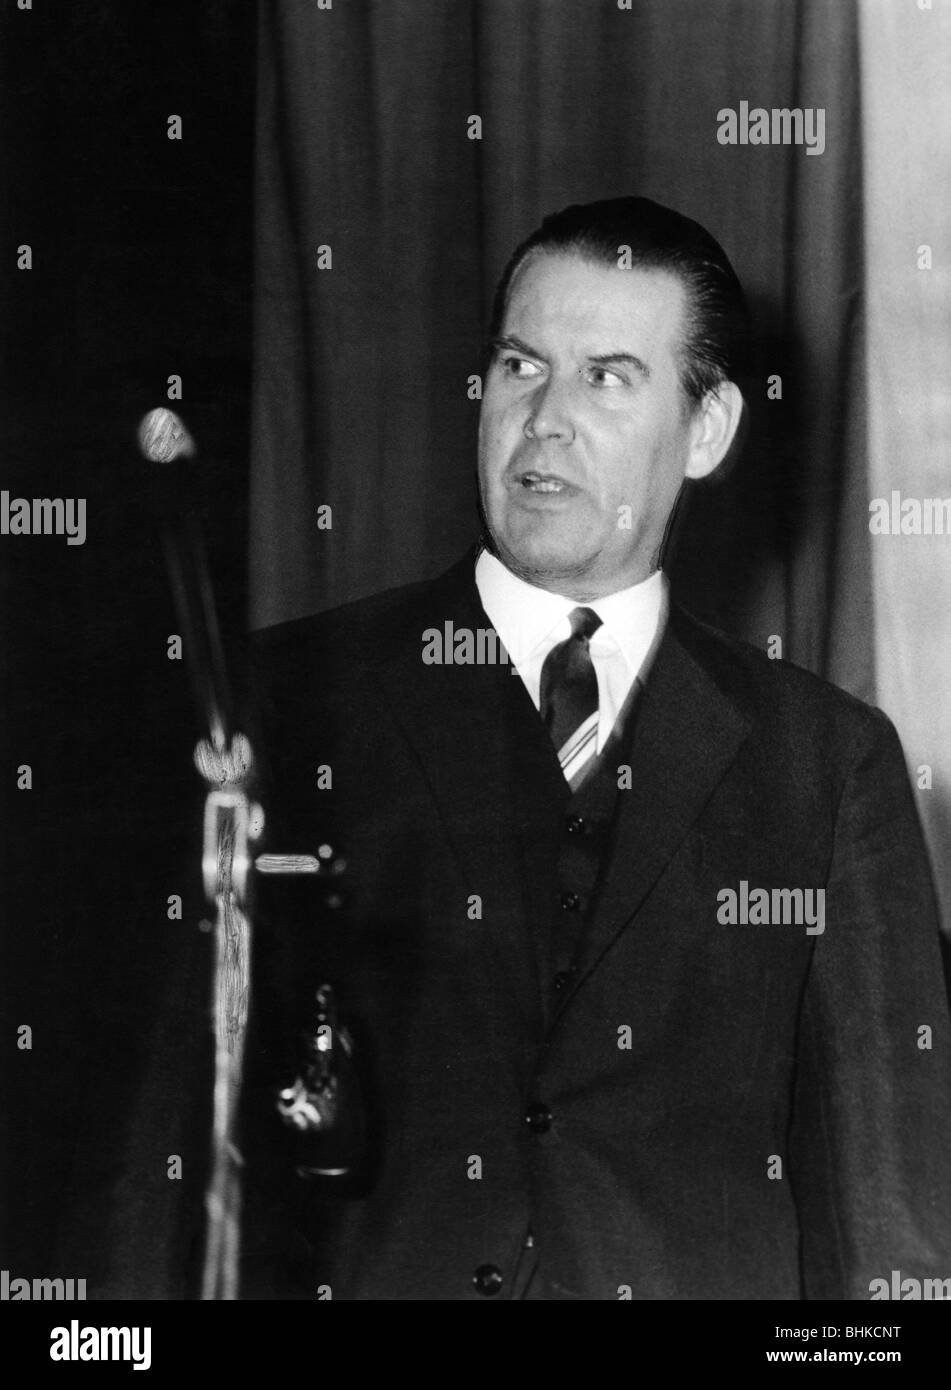 Schroeder, Gerhard, 11.10.1910 - 31.12.1989, German politician (CDU), Federal Minister of the Interior 20.10.1953 - 13.11.1961, half length, 1950s, , Stock Photo